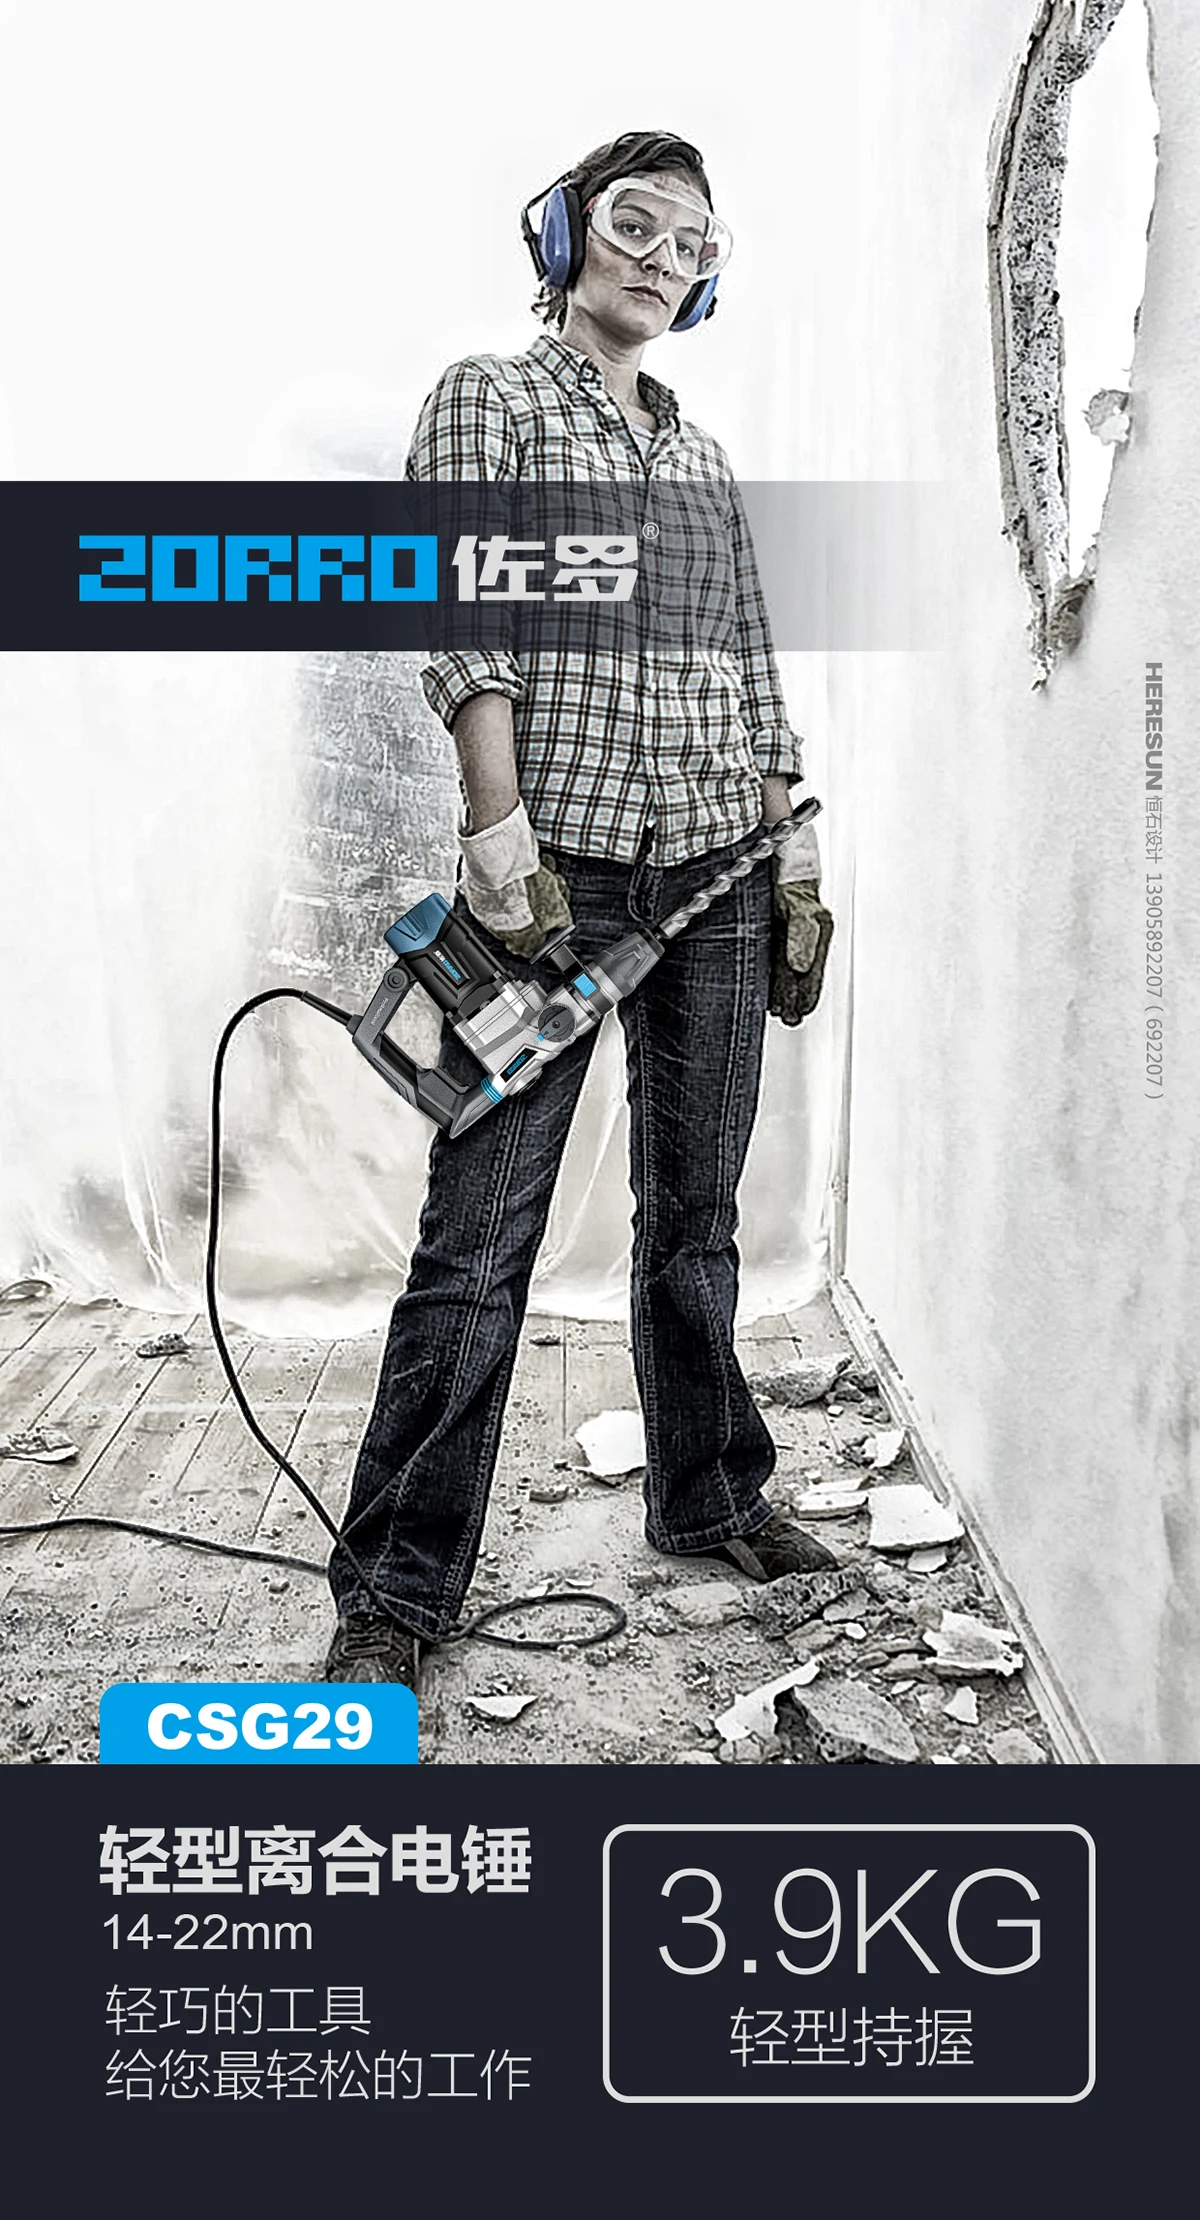 ZORRO CSG29 1500w chicago power hammer drills 26mm power tools impact drill bits